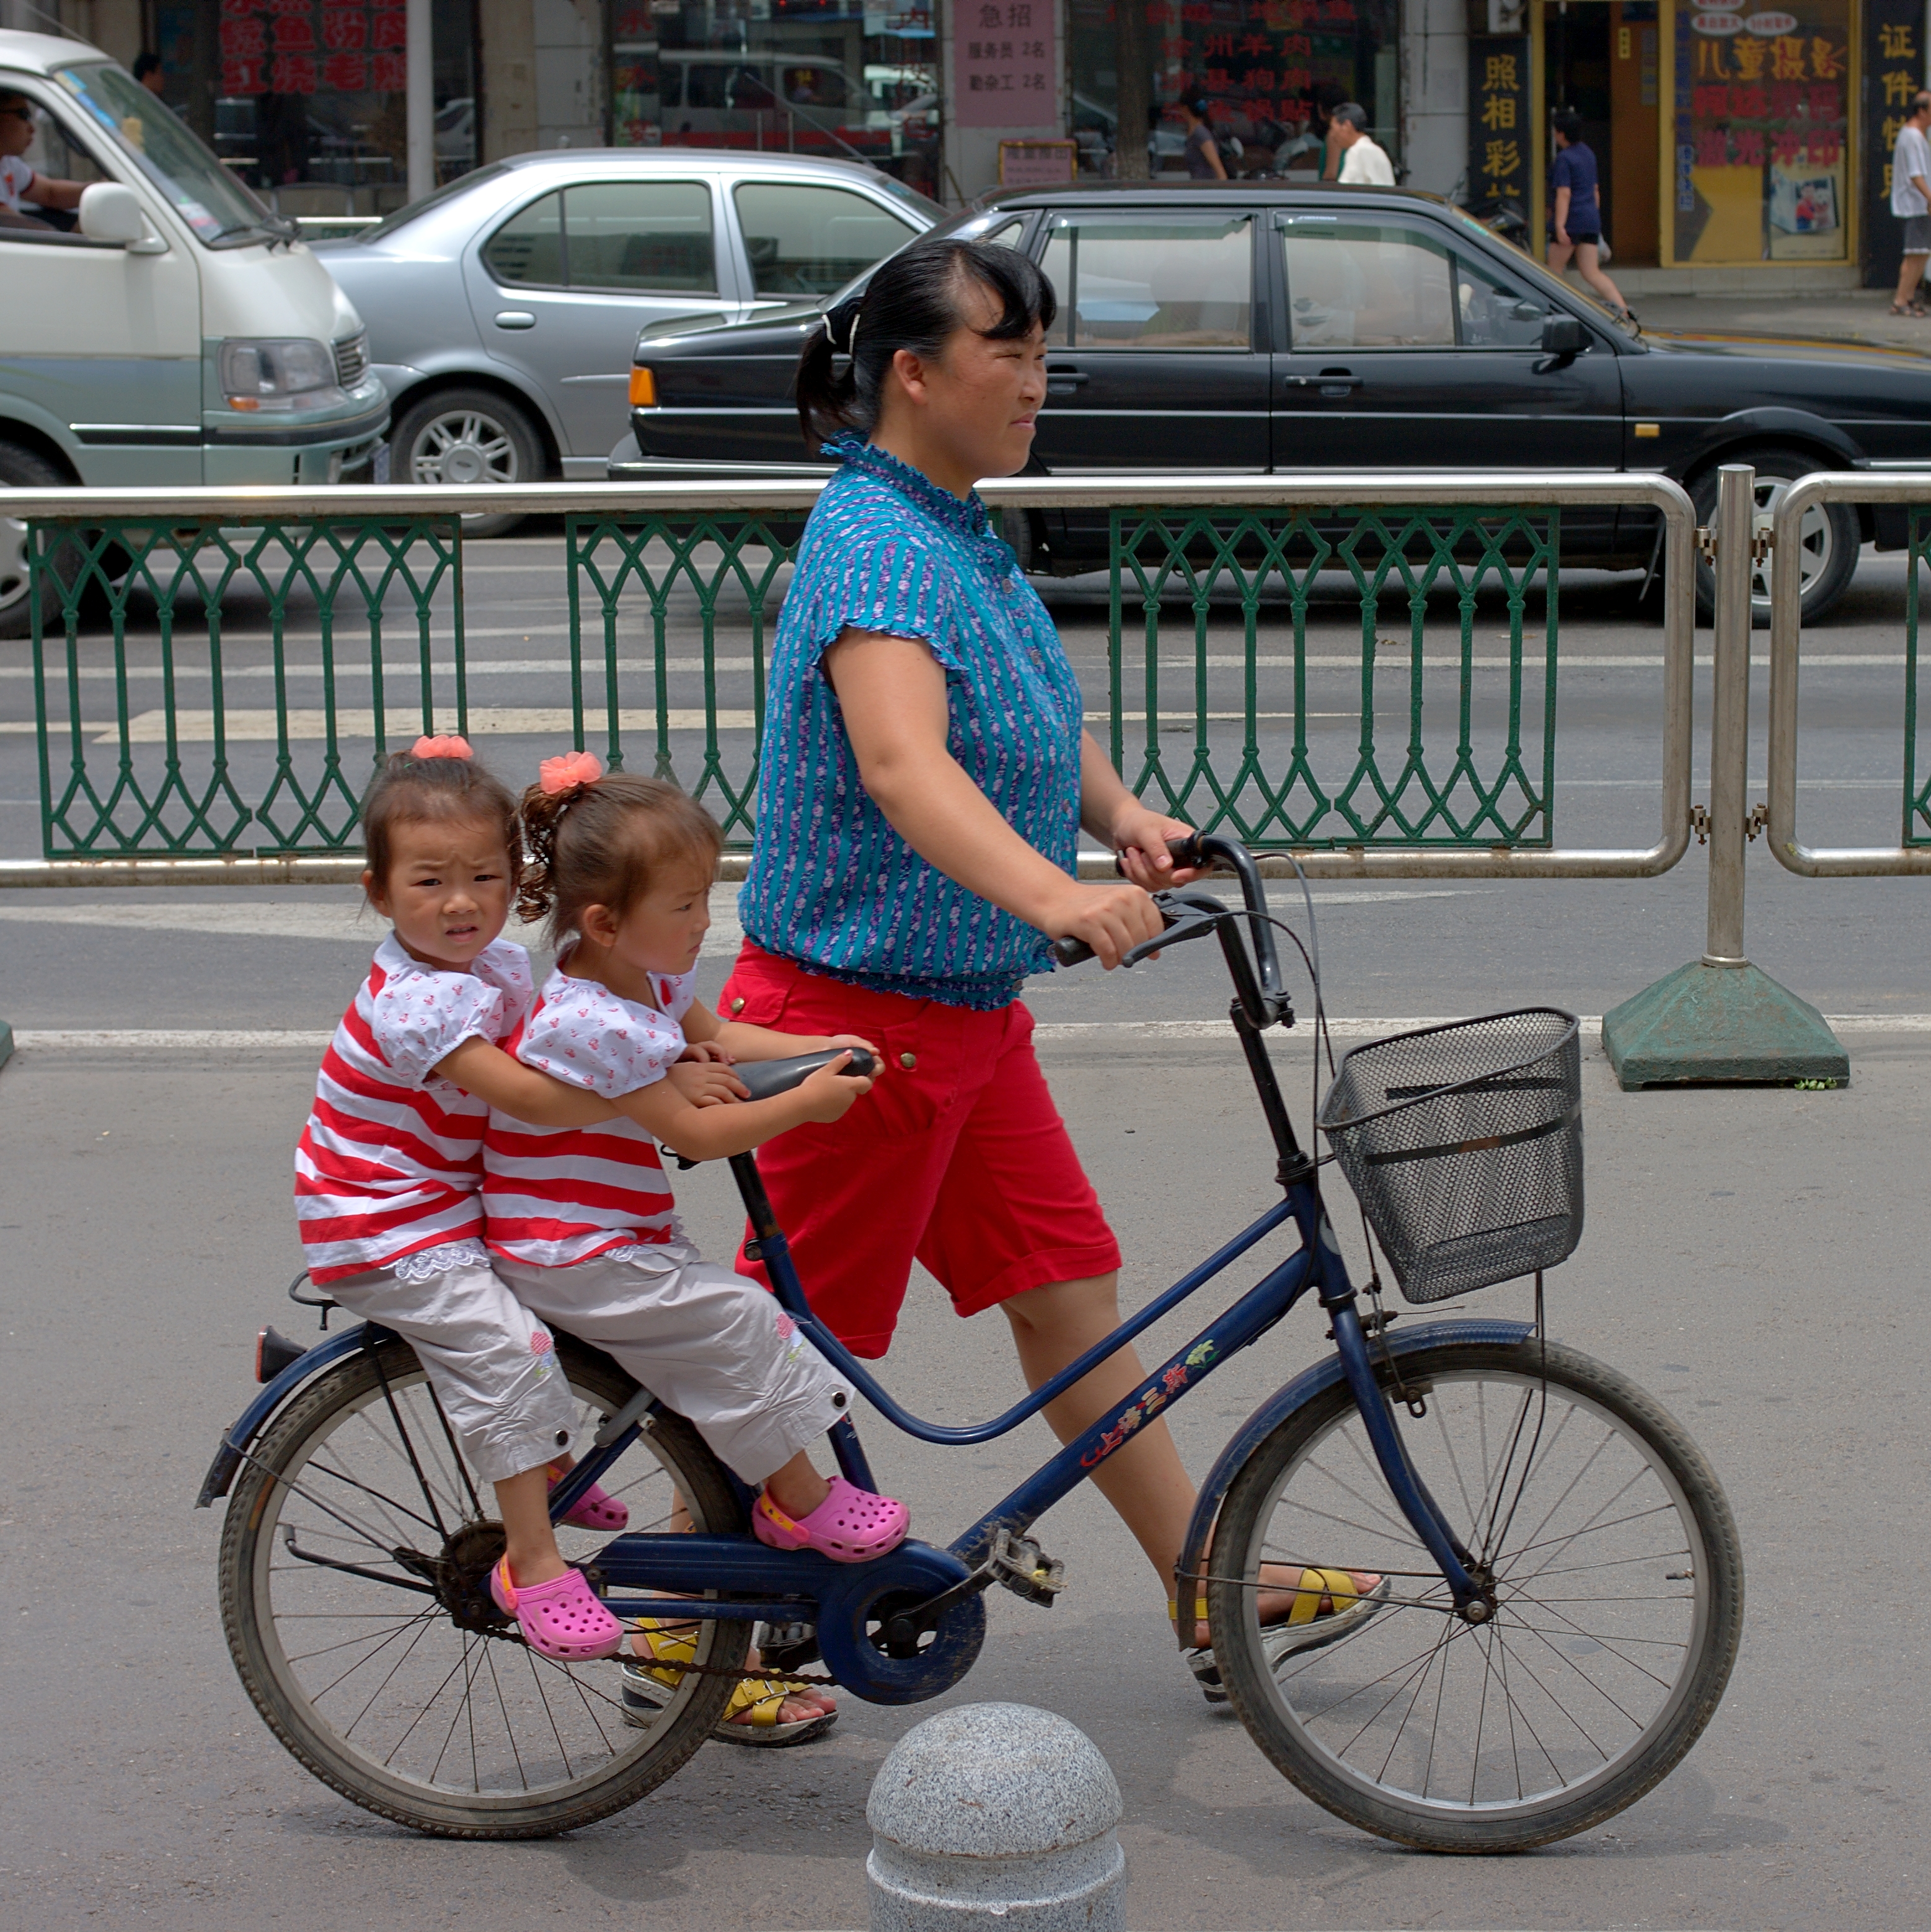 Woman pushing a bike with two kids